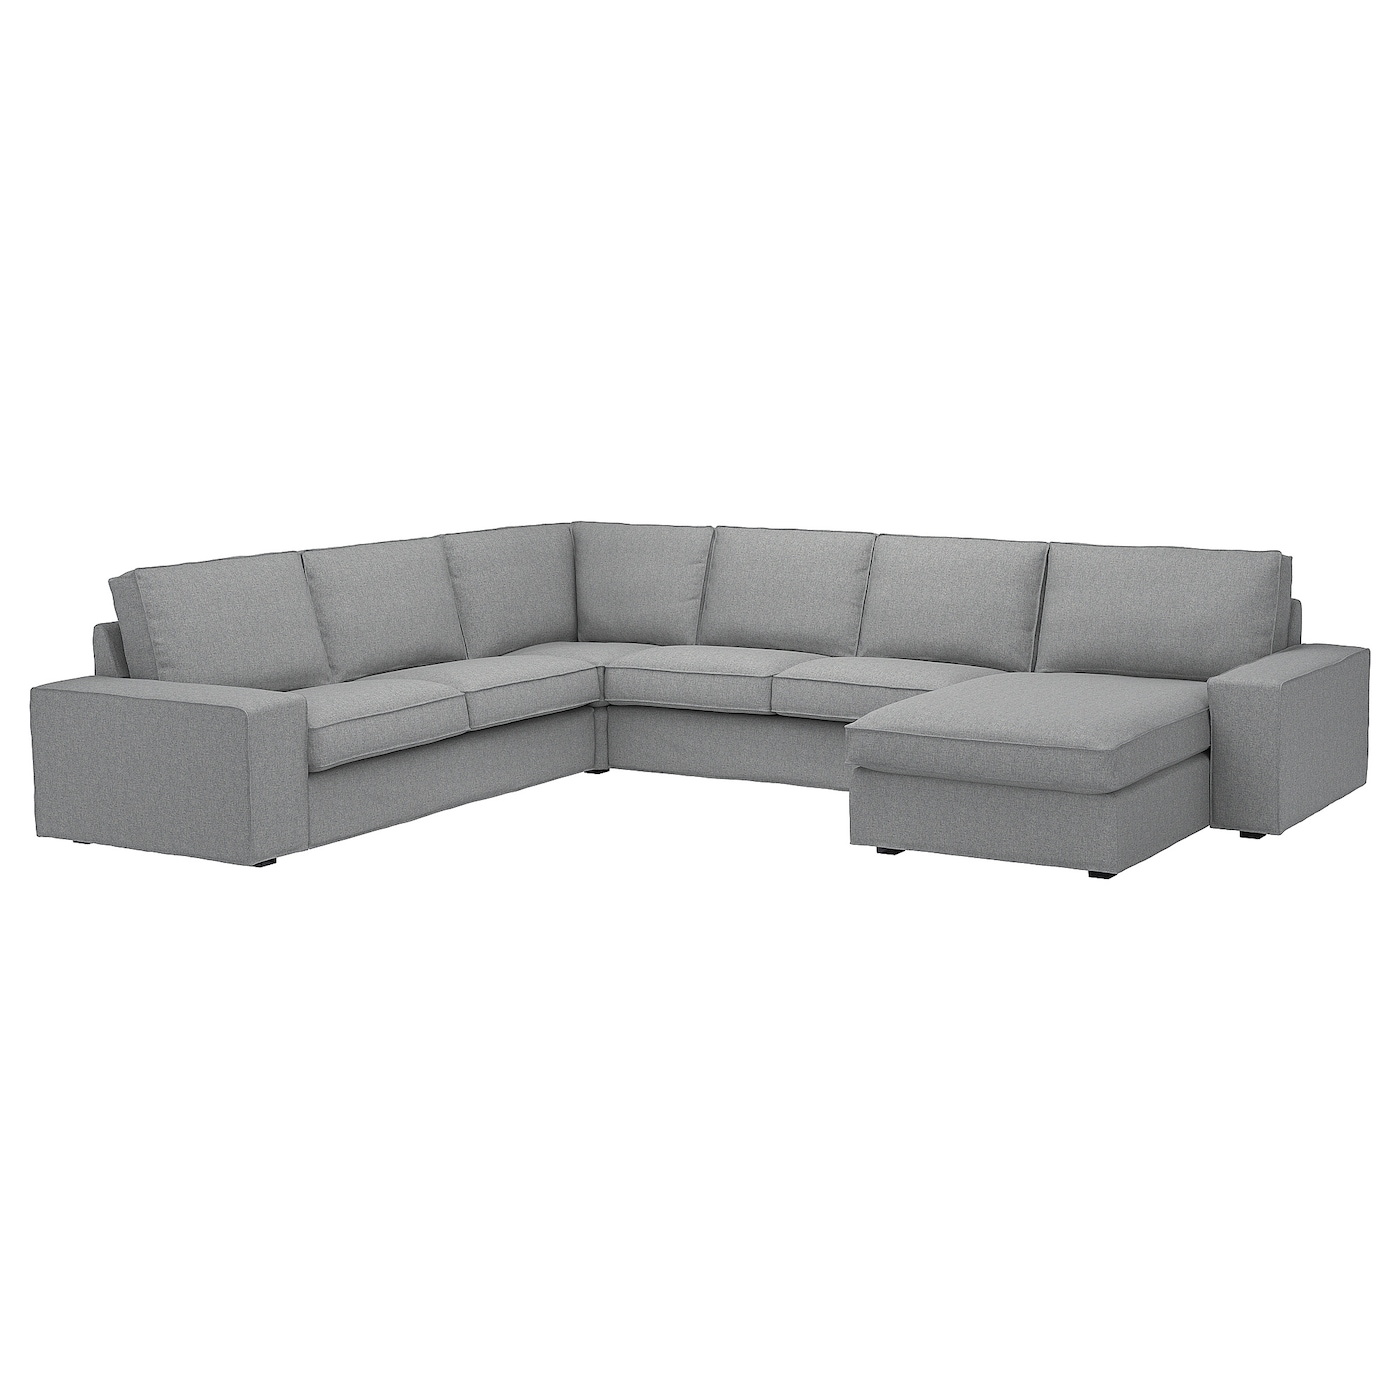 КИВИК Диван угловой, 5-местный. диван+диван, Тибблби бежевый/серый KIVIK IKEA чехол на 2 местный диван ikea kivik светло серый